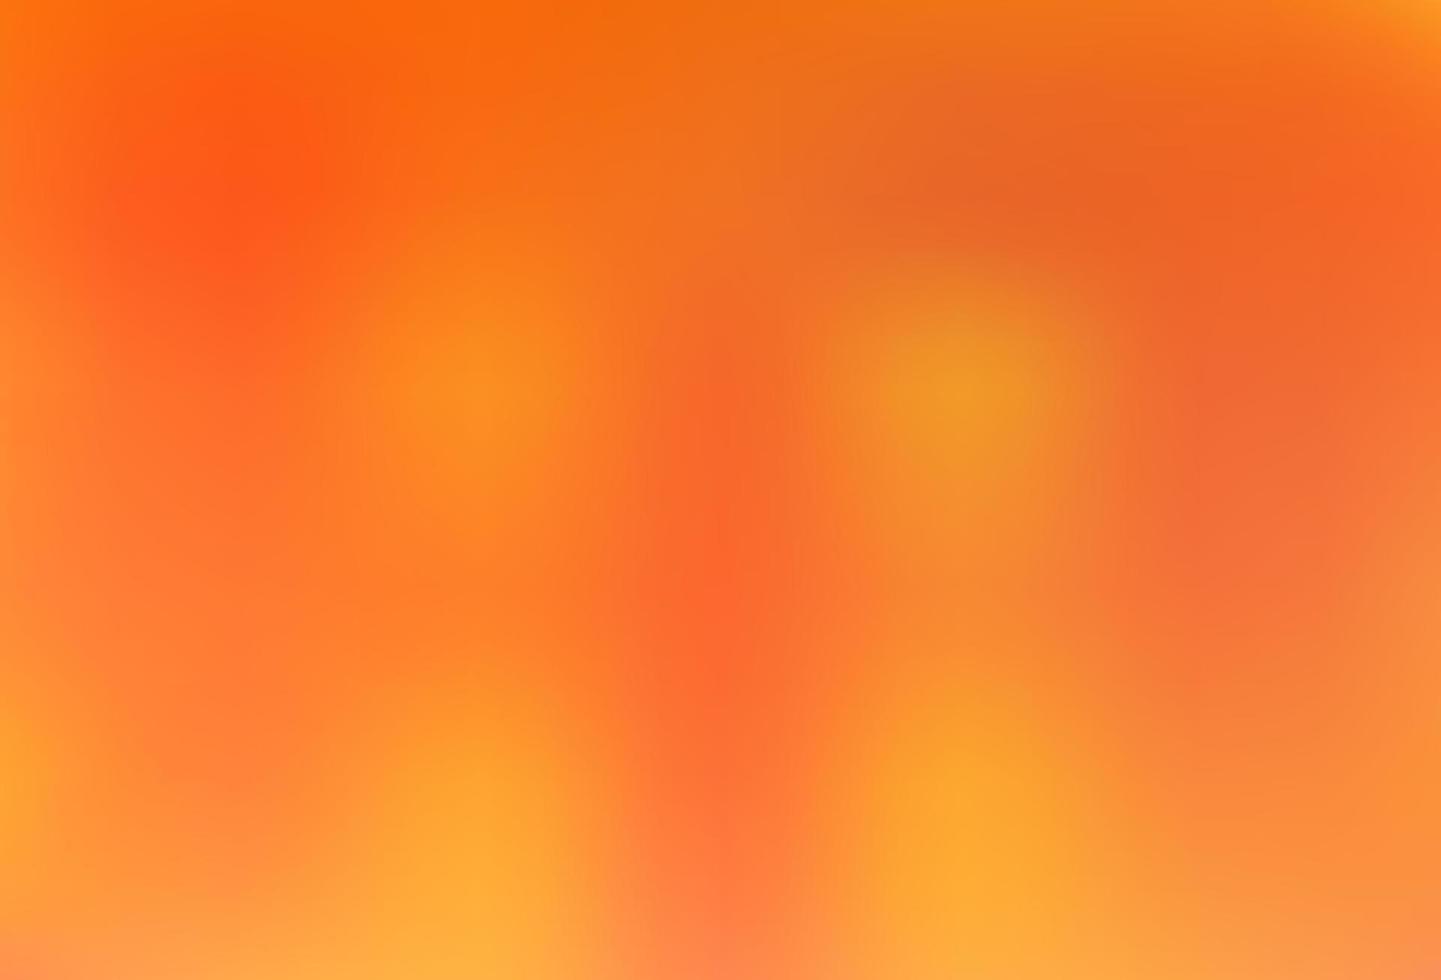 Light Orange vector abstract background.